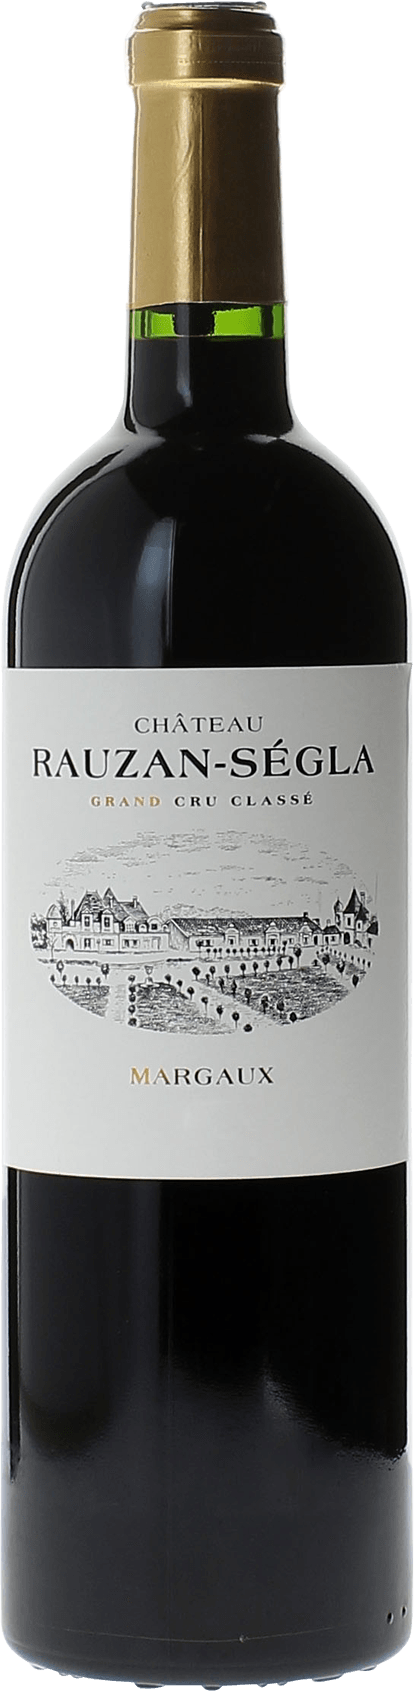 Rauzan-segla 2012 2me Grand cru class Margaux, Bordeaux rouge